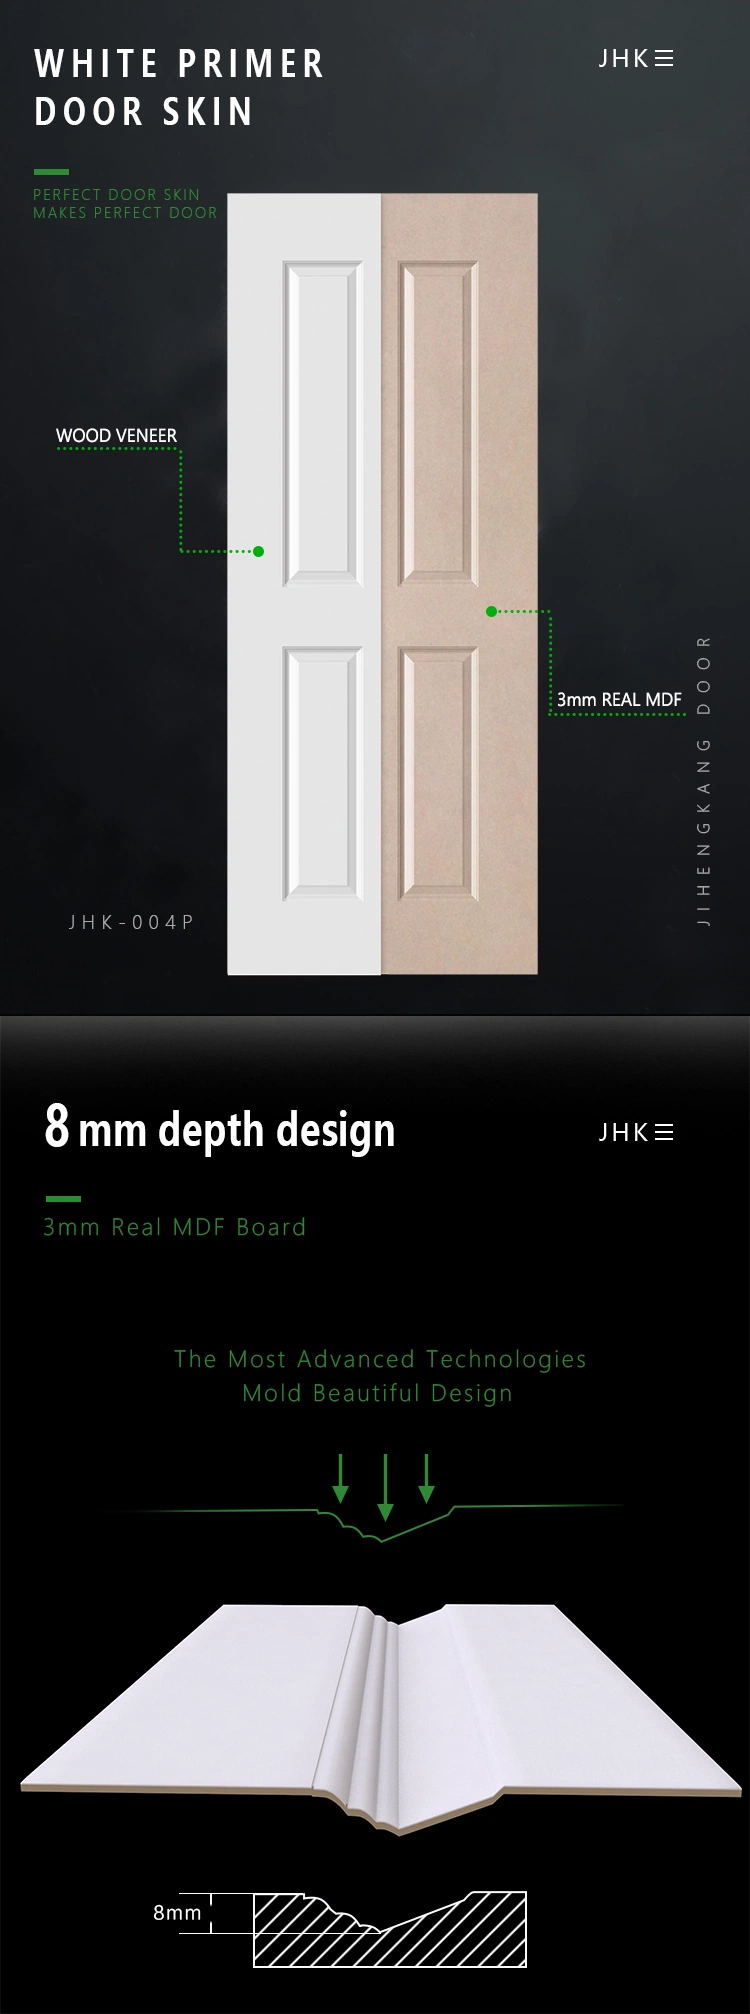 Jhk-F05-Wg White Primer MDF Door Skin with Grooves